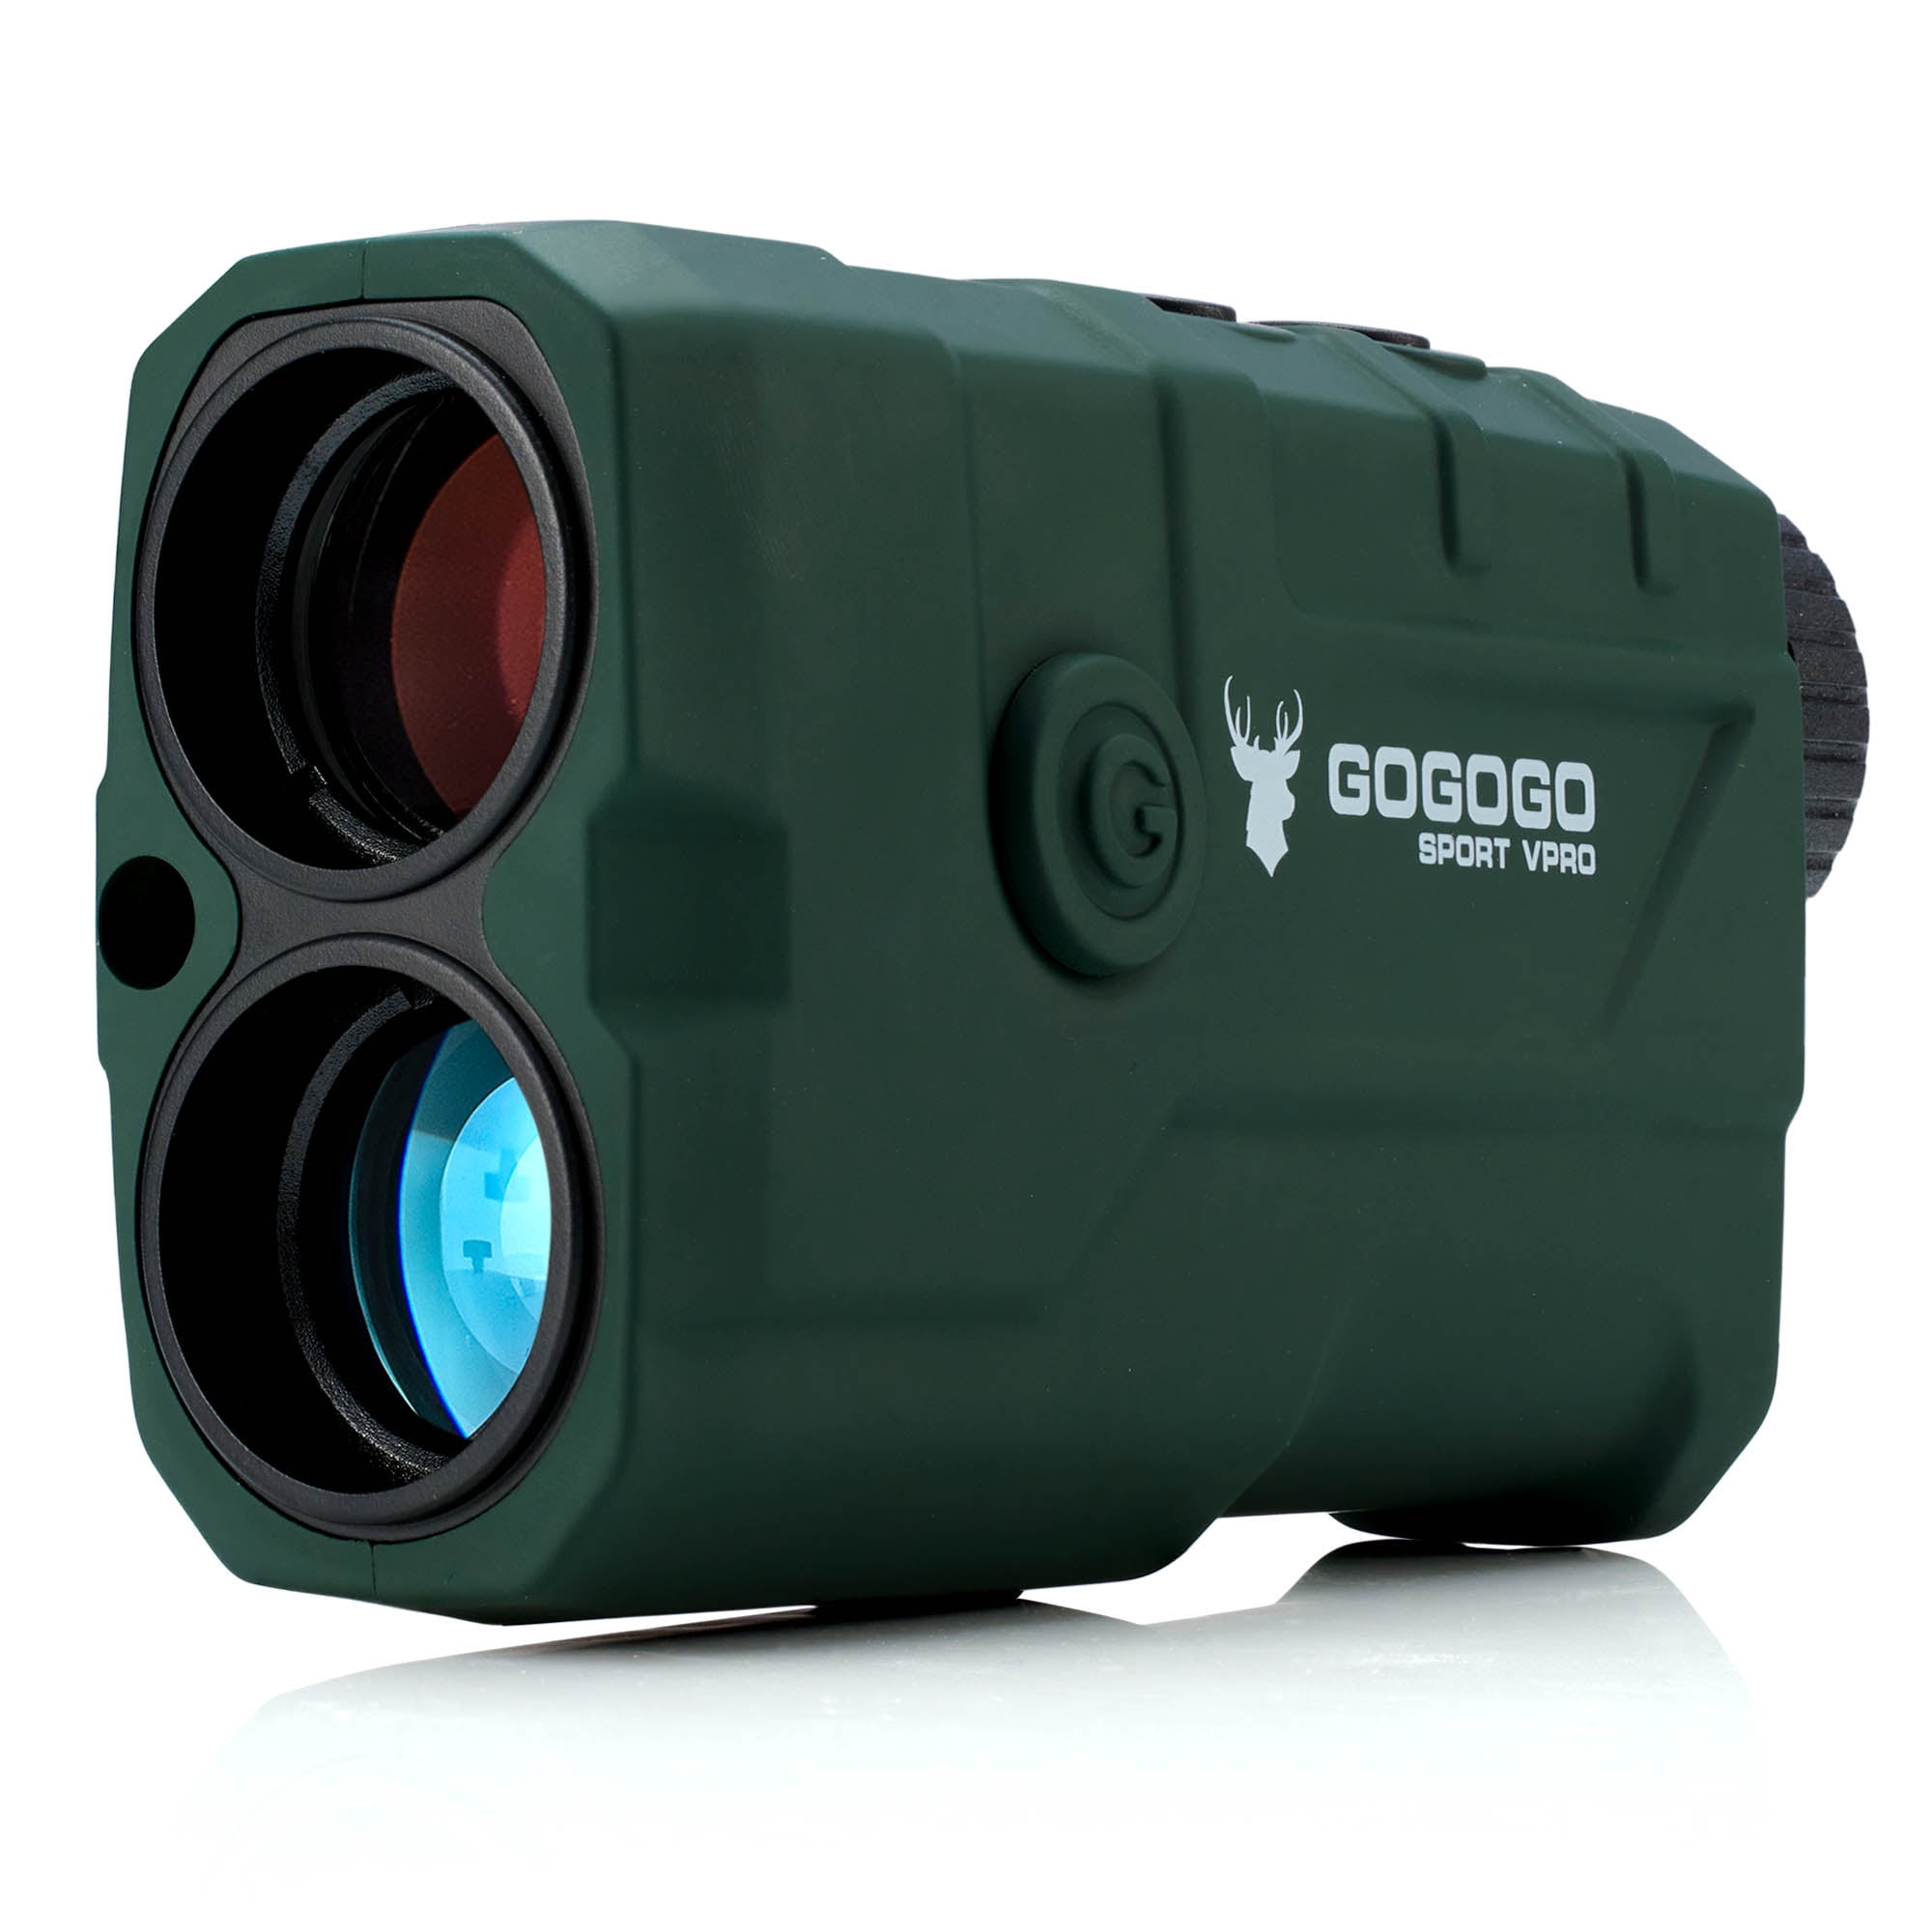 Gogogo GS34 Rangefinder 1200Y - WiscoGolfAddict